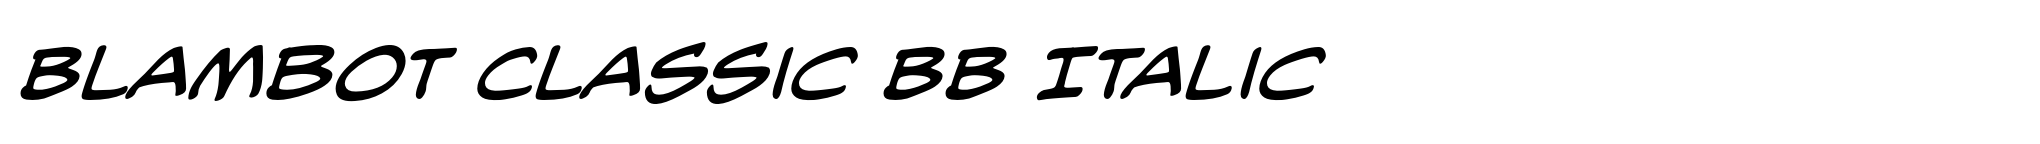 Blambot Classic BB Italic image